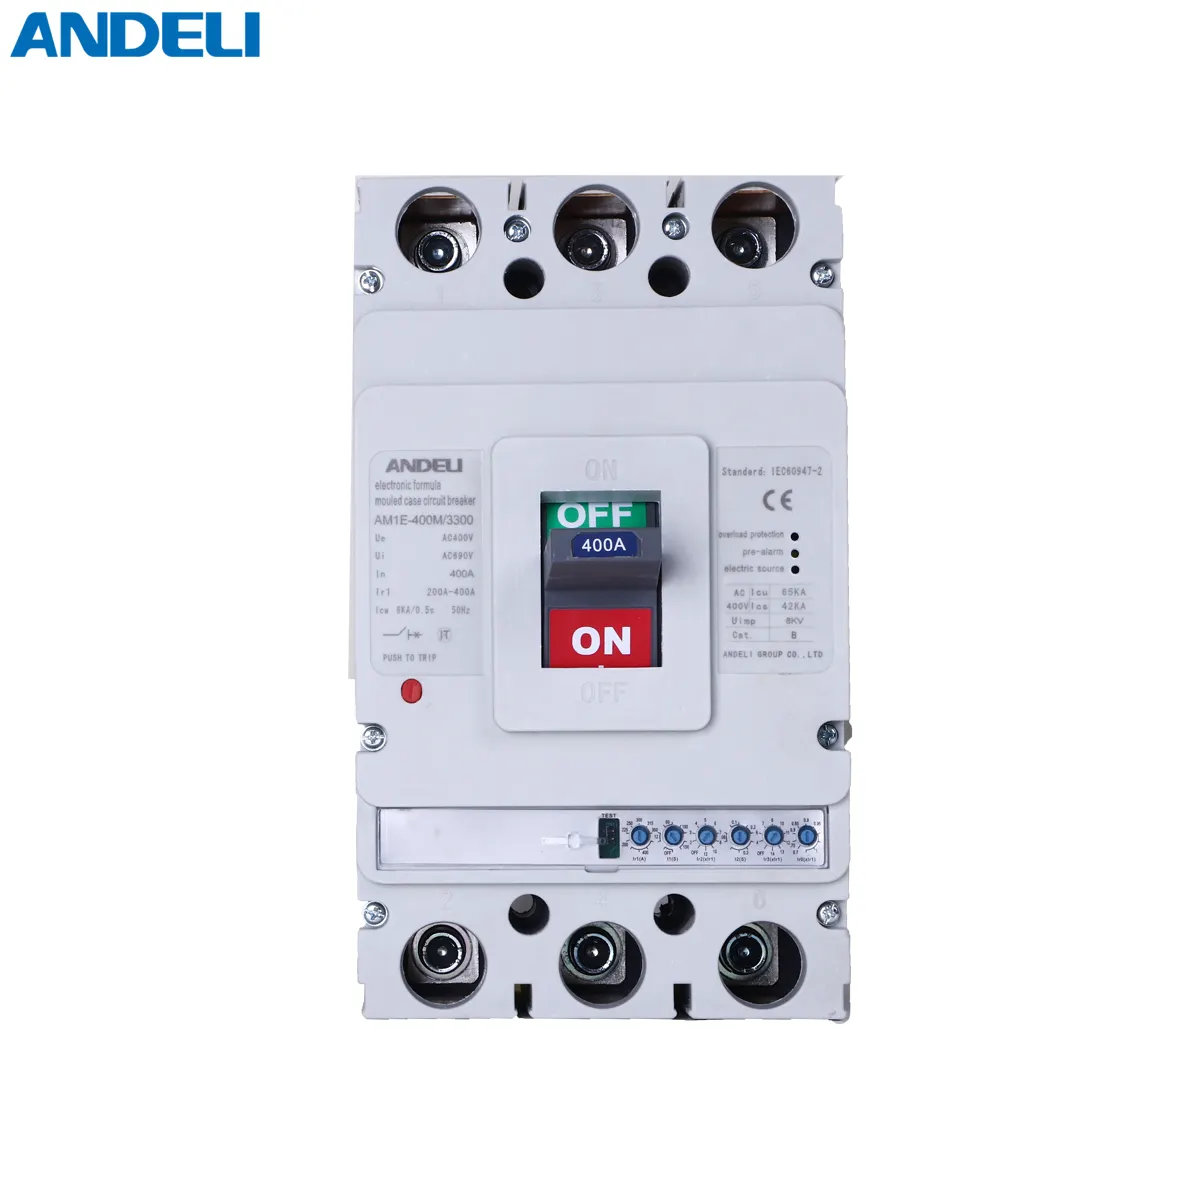 ANDELI AM1E-400/3300 200 225 250 280 315 350 400แอมป์ไฟฟ้า3เสาเบรกเกอร์วงจรคุณภาพสูง